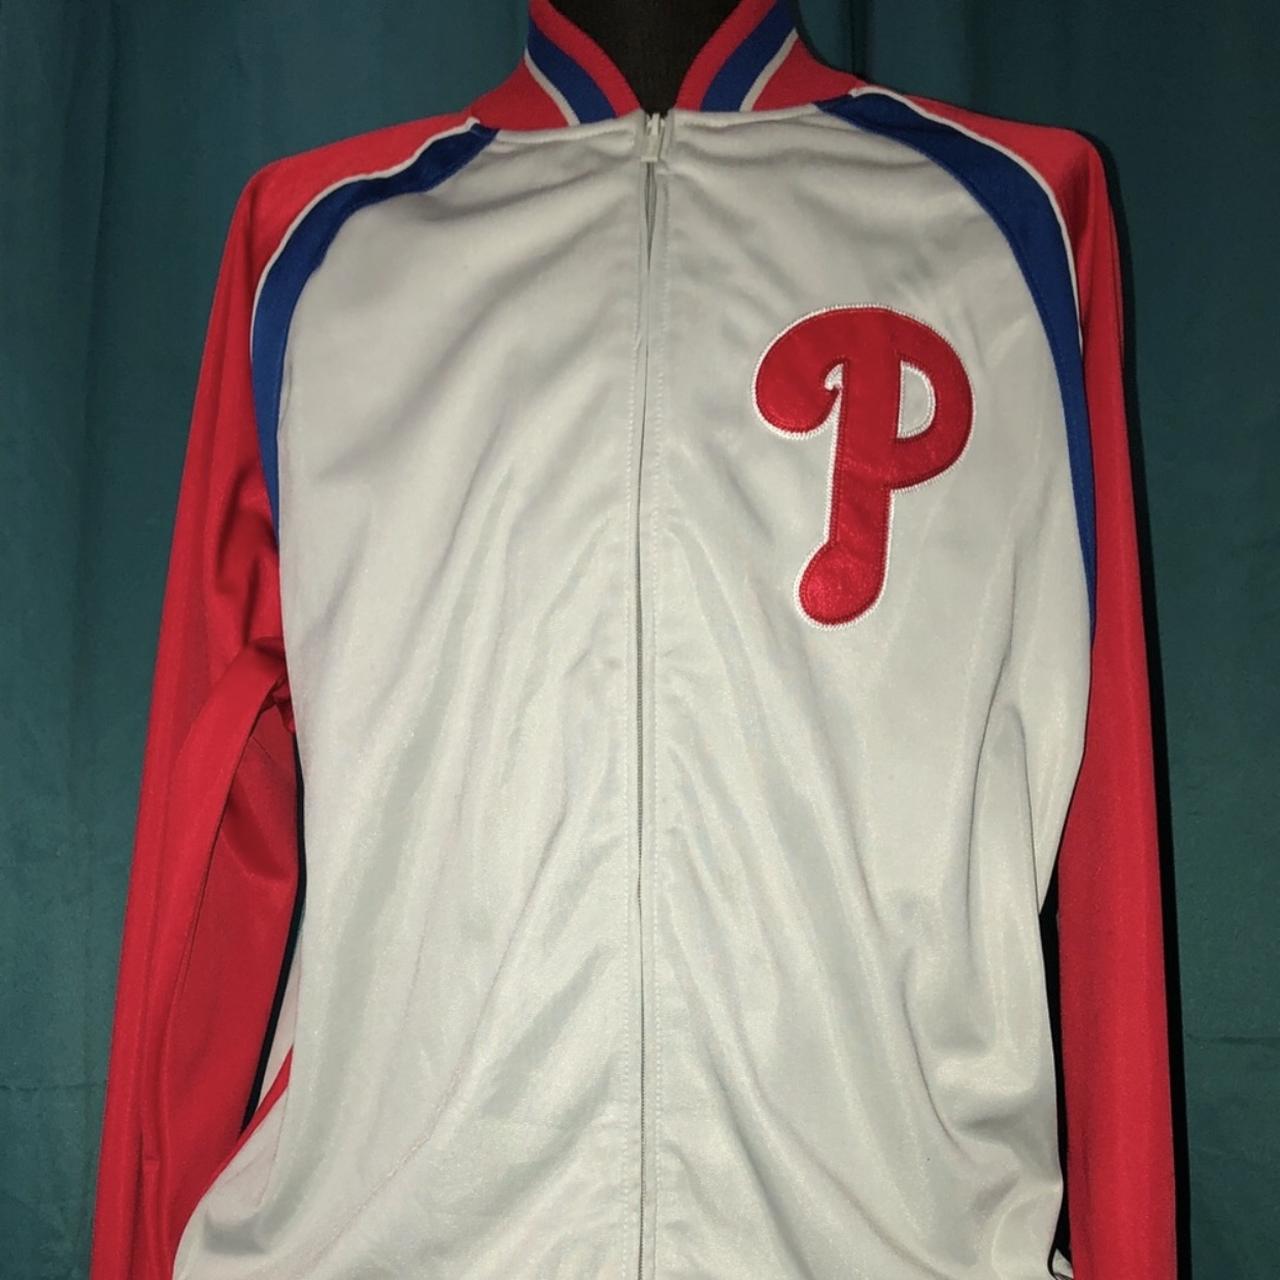 Phillies stitches jacket, athletic gear, genuine